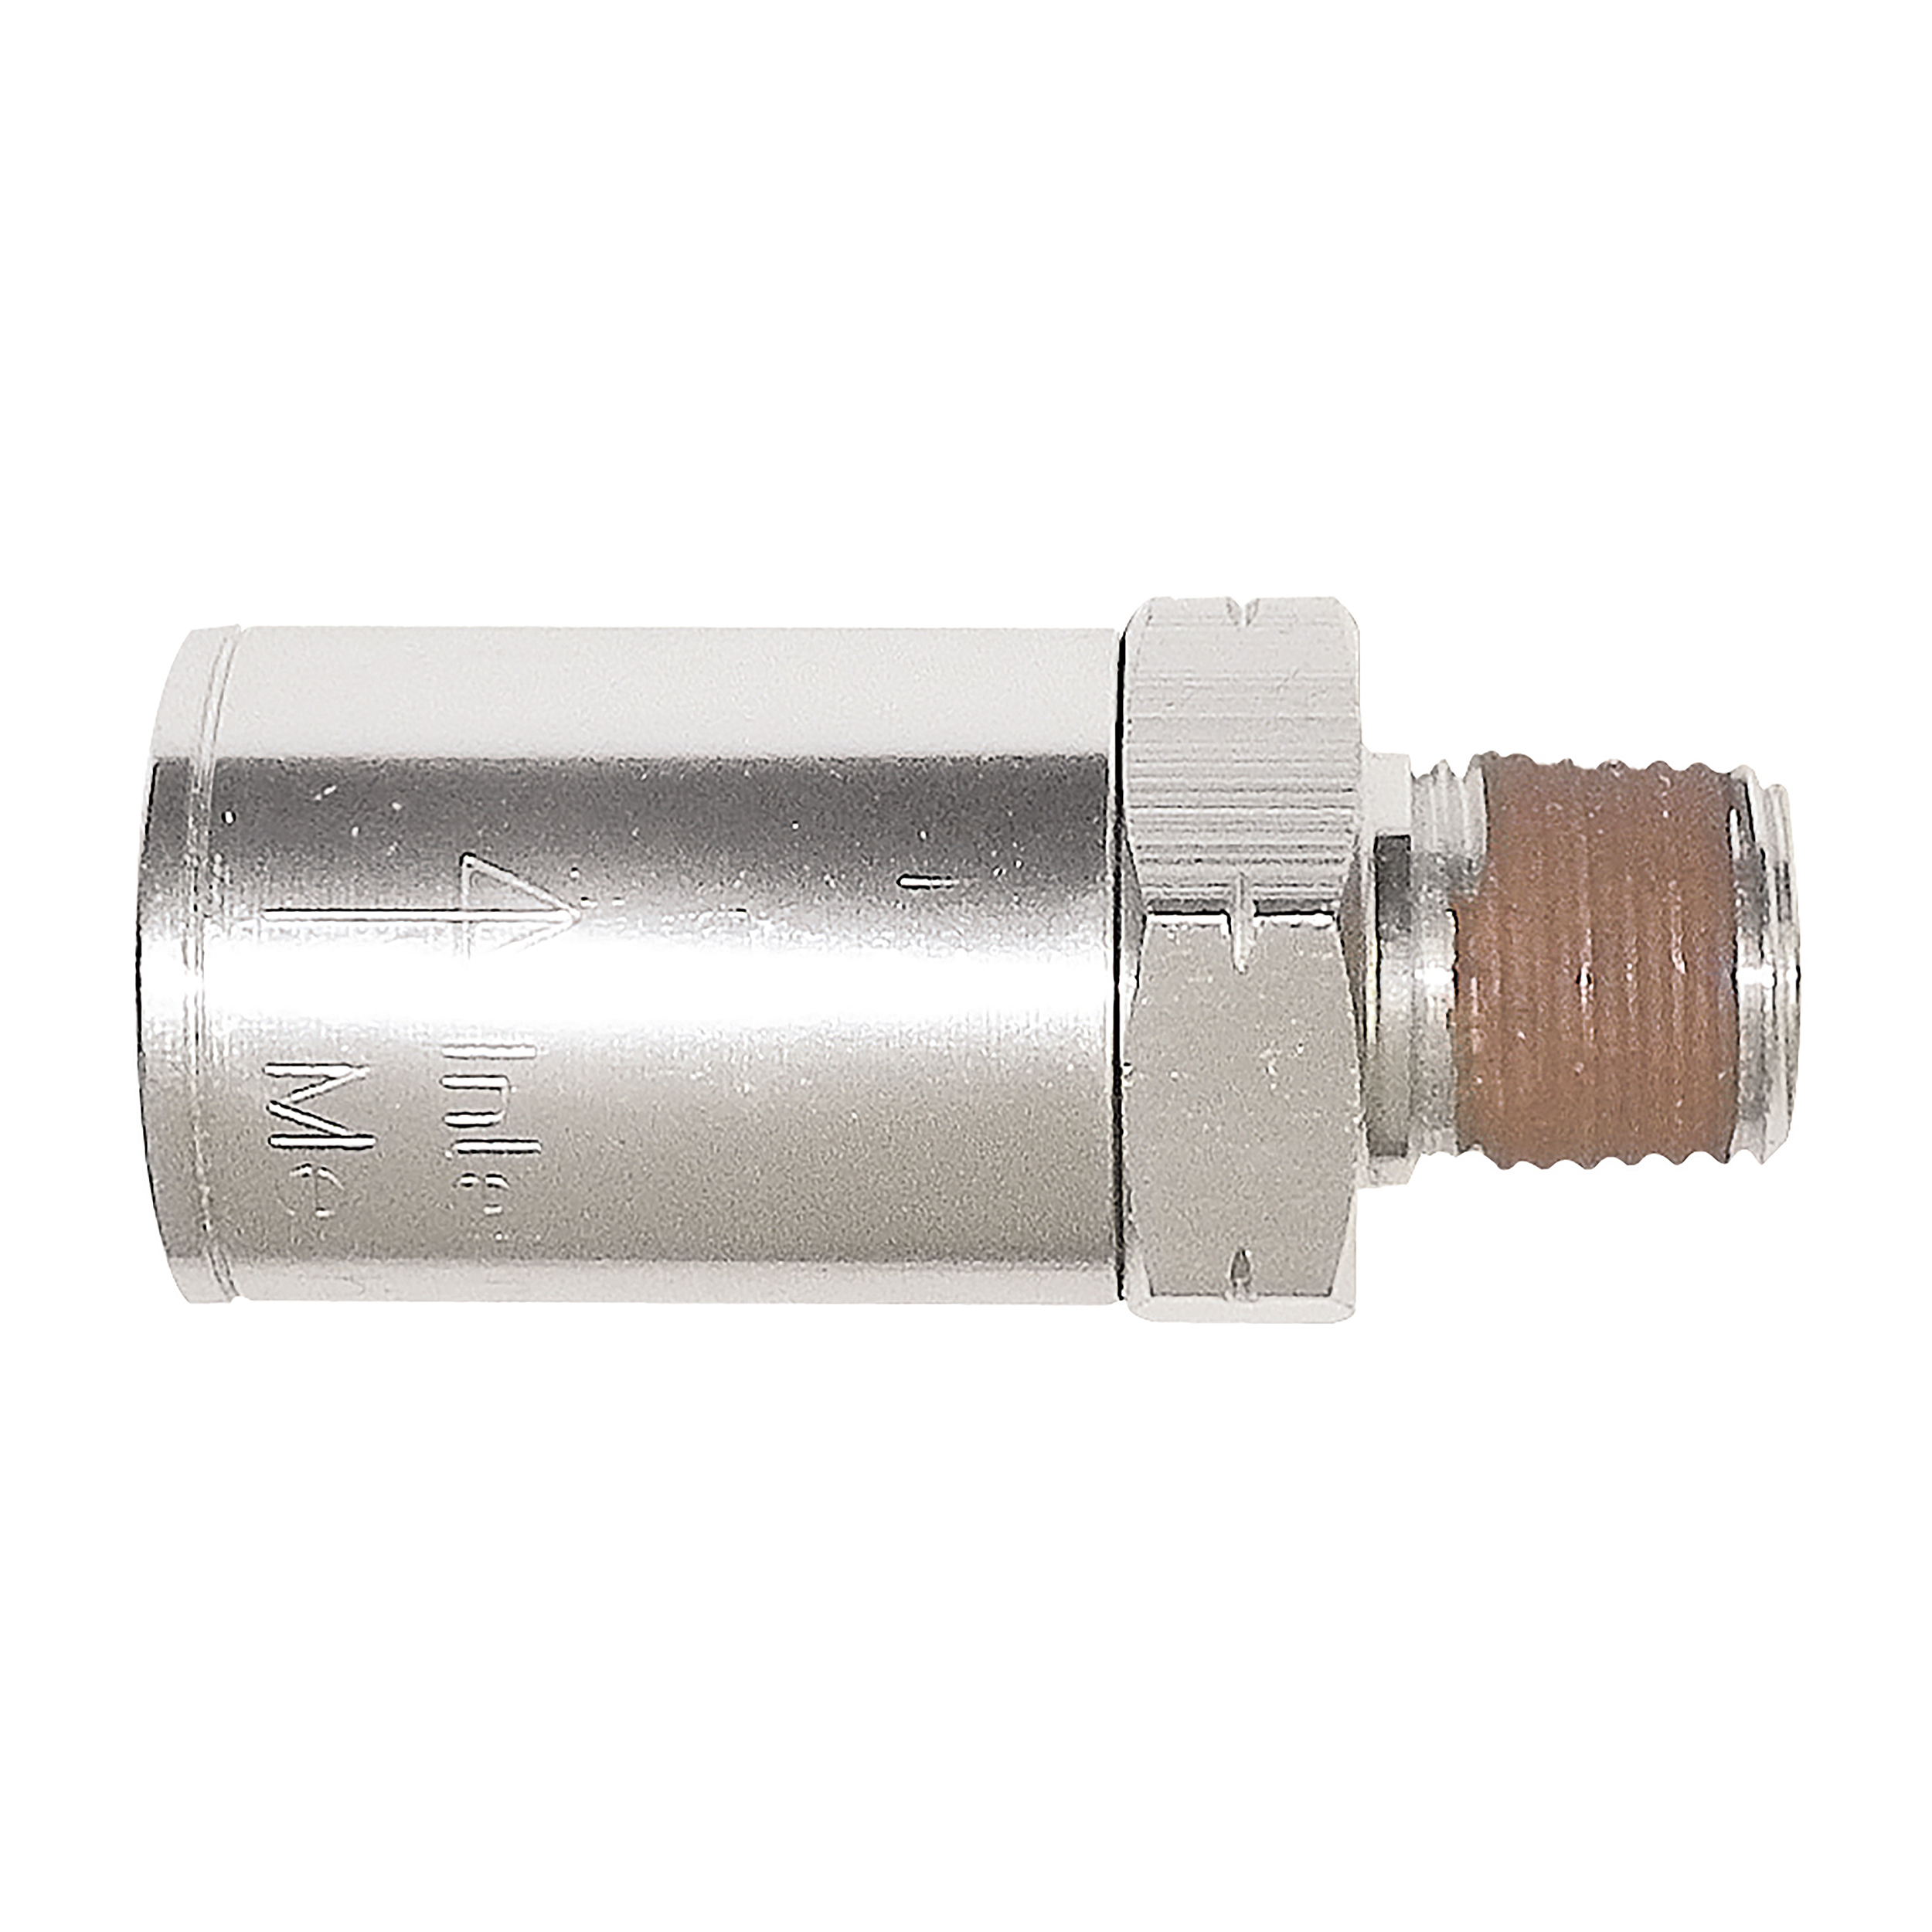 Swivel connector, G¼, length: 48.8 mm, Ø21 mm, max. operating pressure: 10 bar/145 psi, aluminium, 29 g, filter porosity: 40 µm